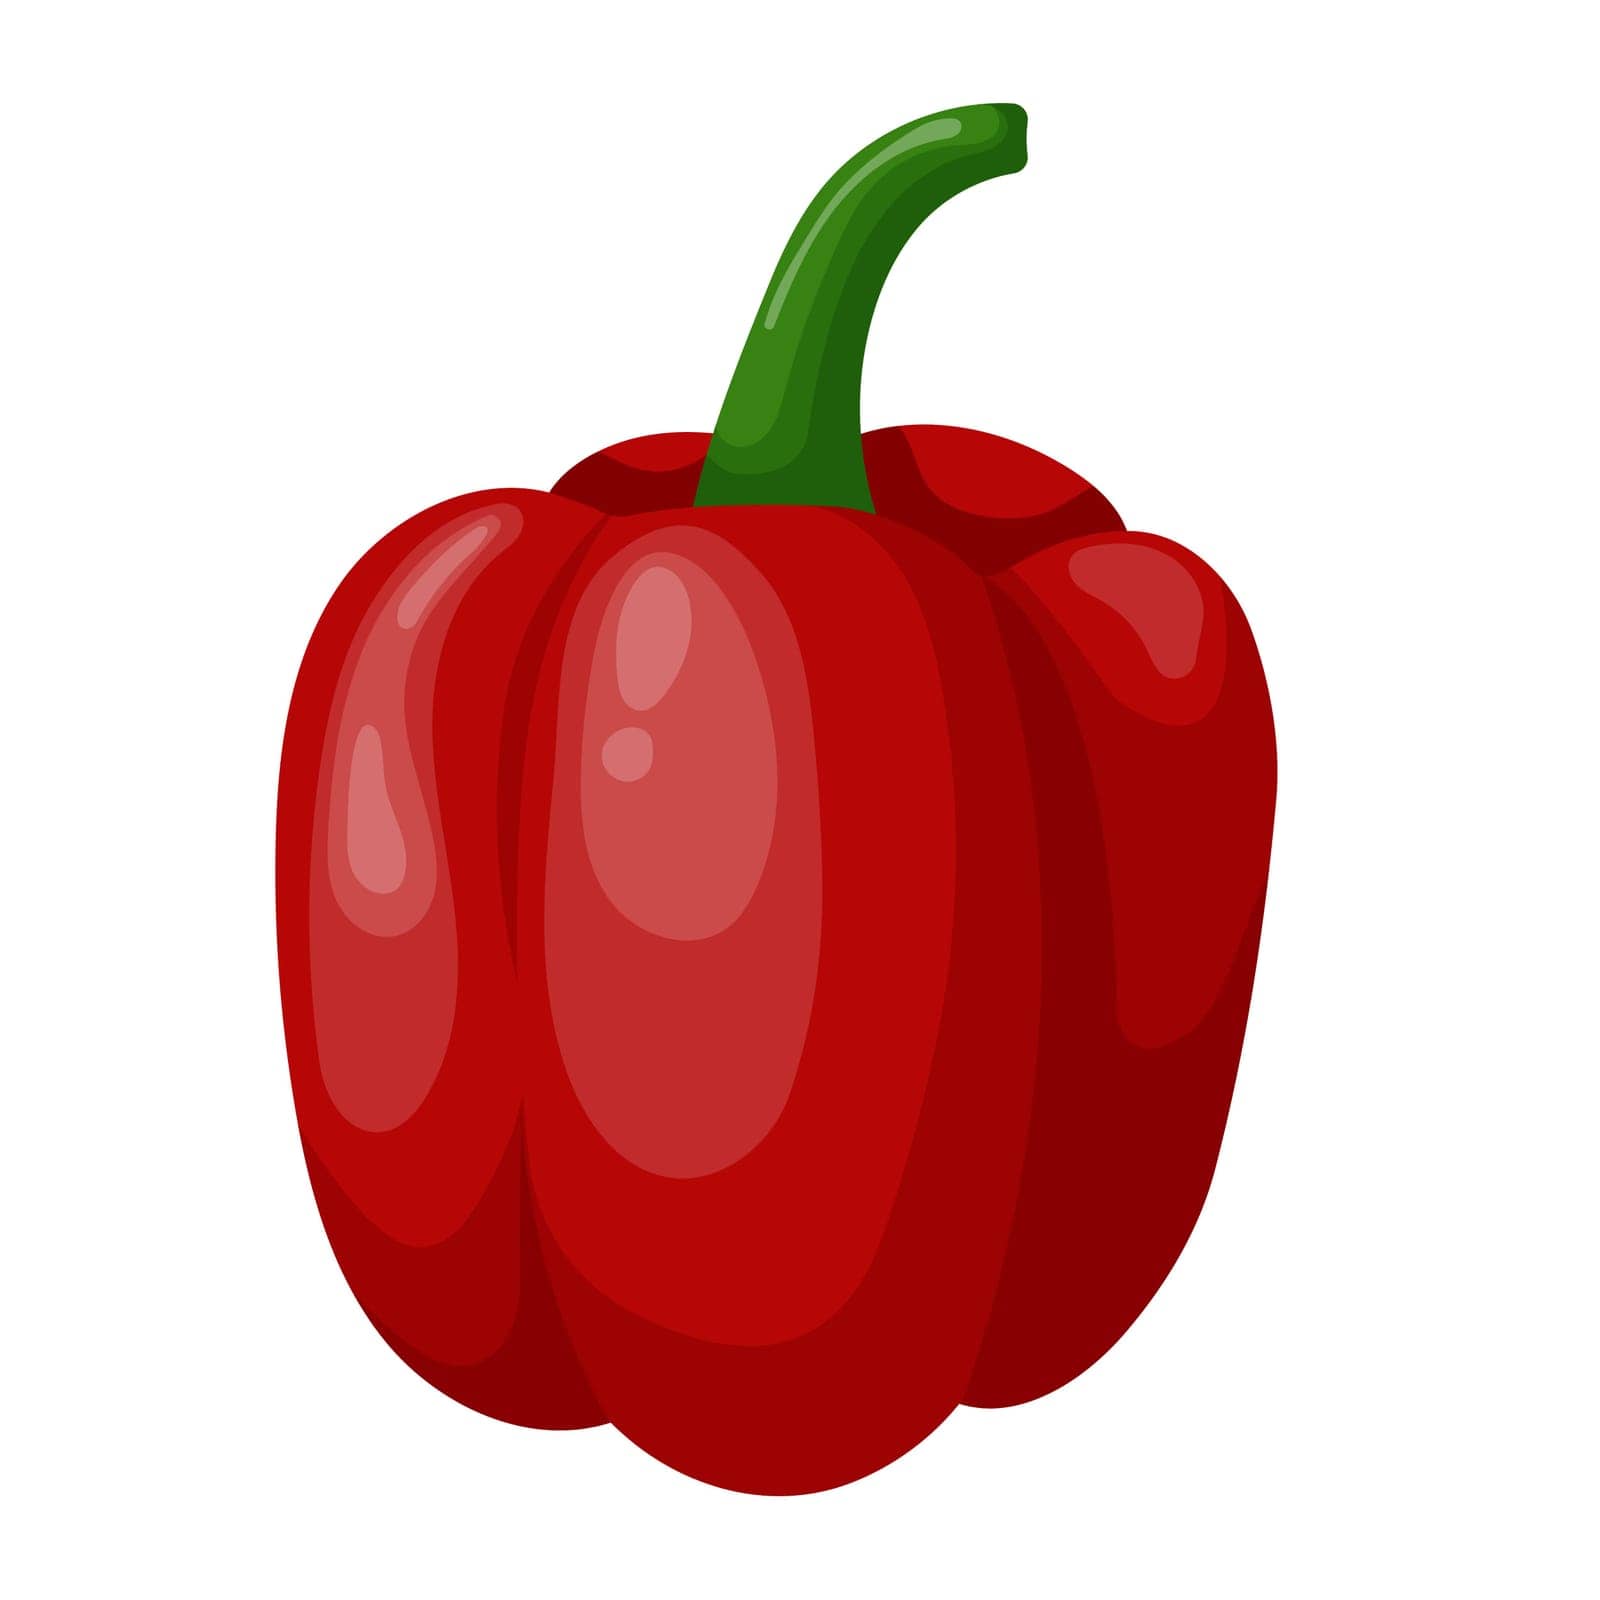 Bulgarian pepper isolated on a white background. Sweet red pepper, bell pepper. Vector illustration of sweet pepper.